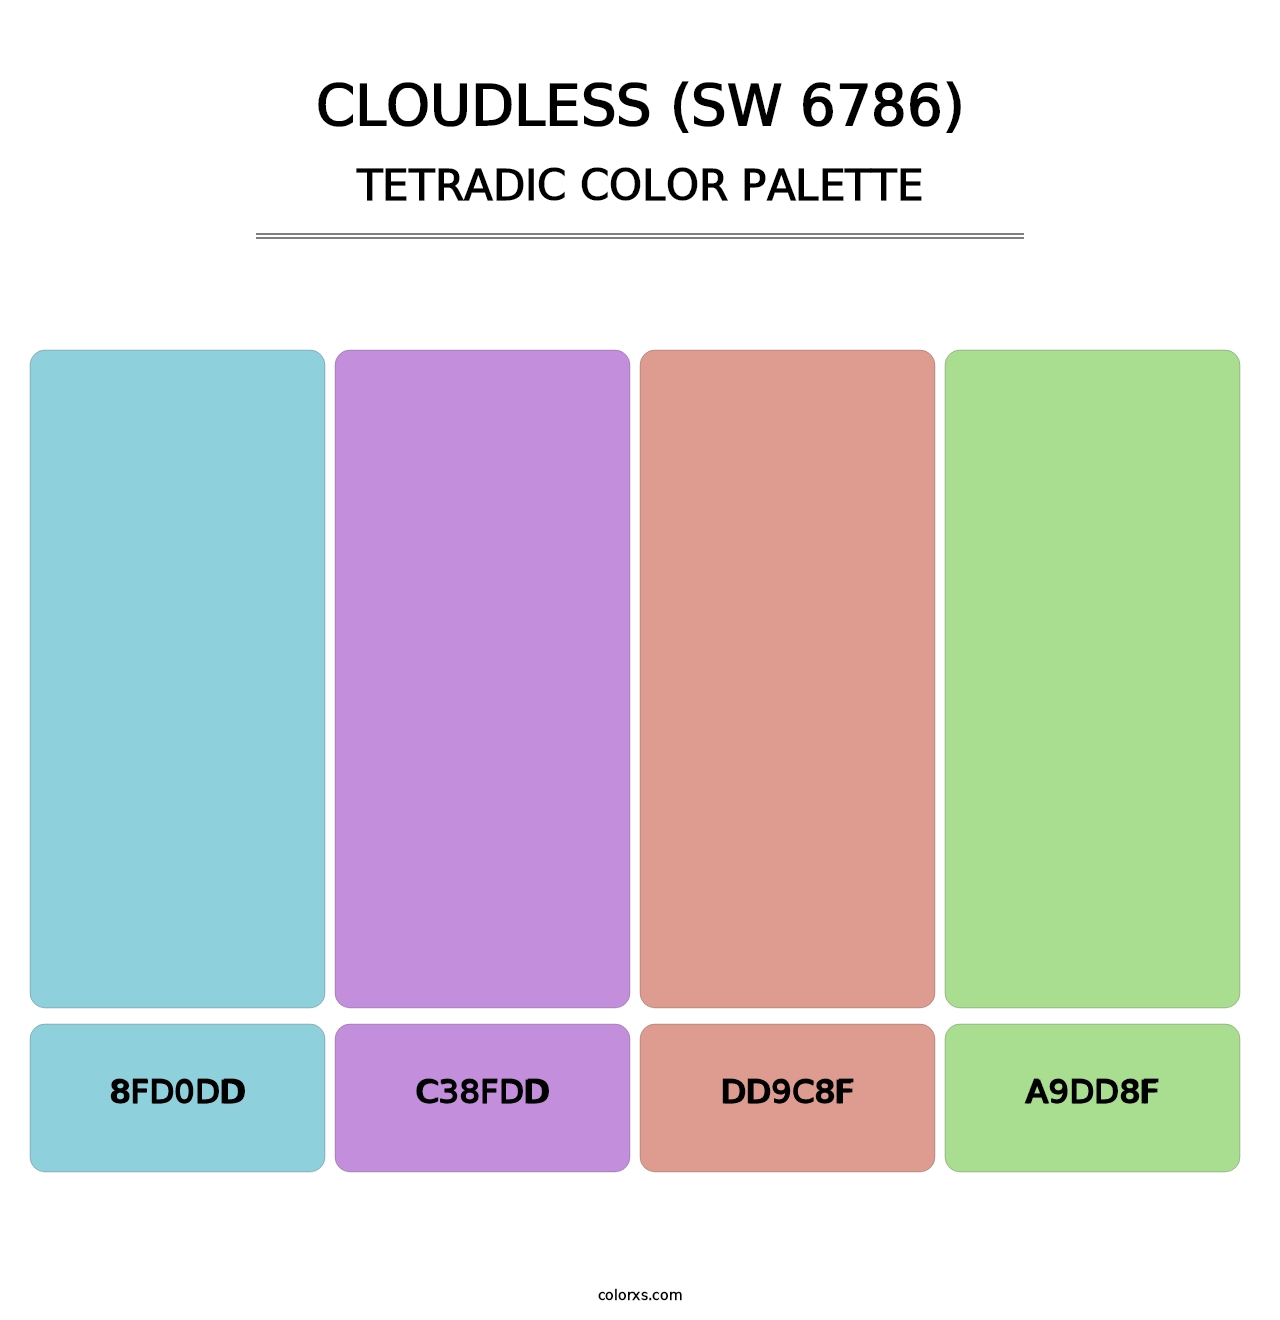 Cloudless (SW 6786) - Tetradic Color Palette